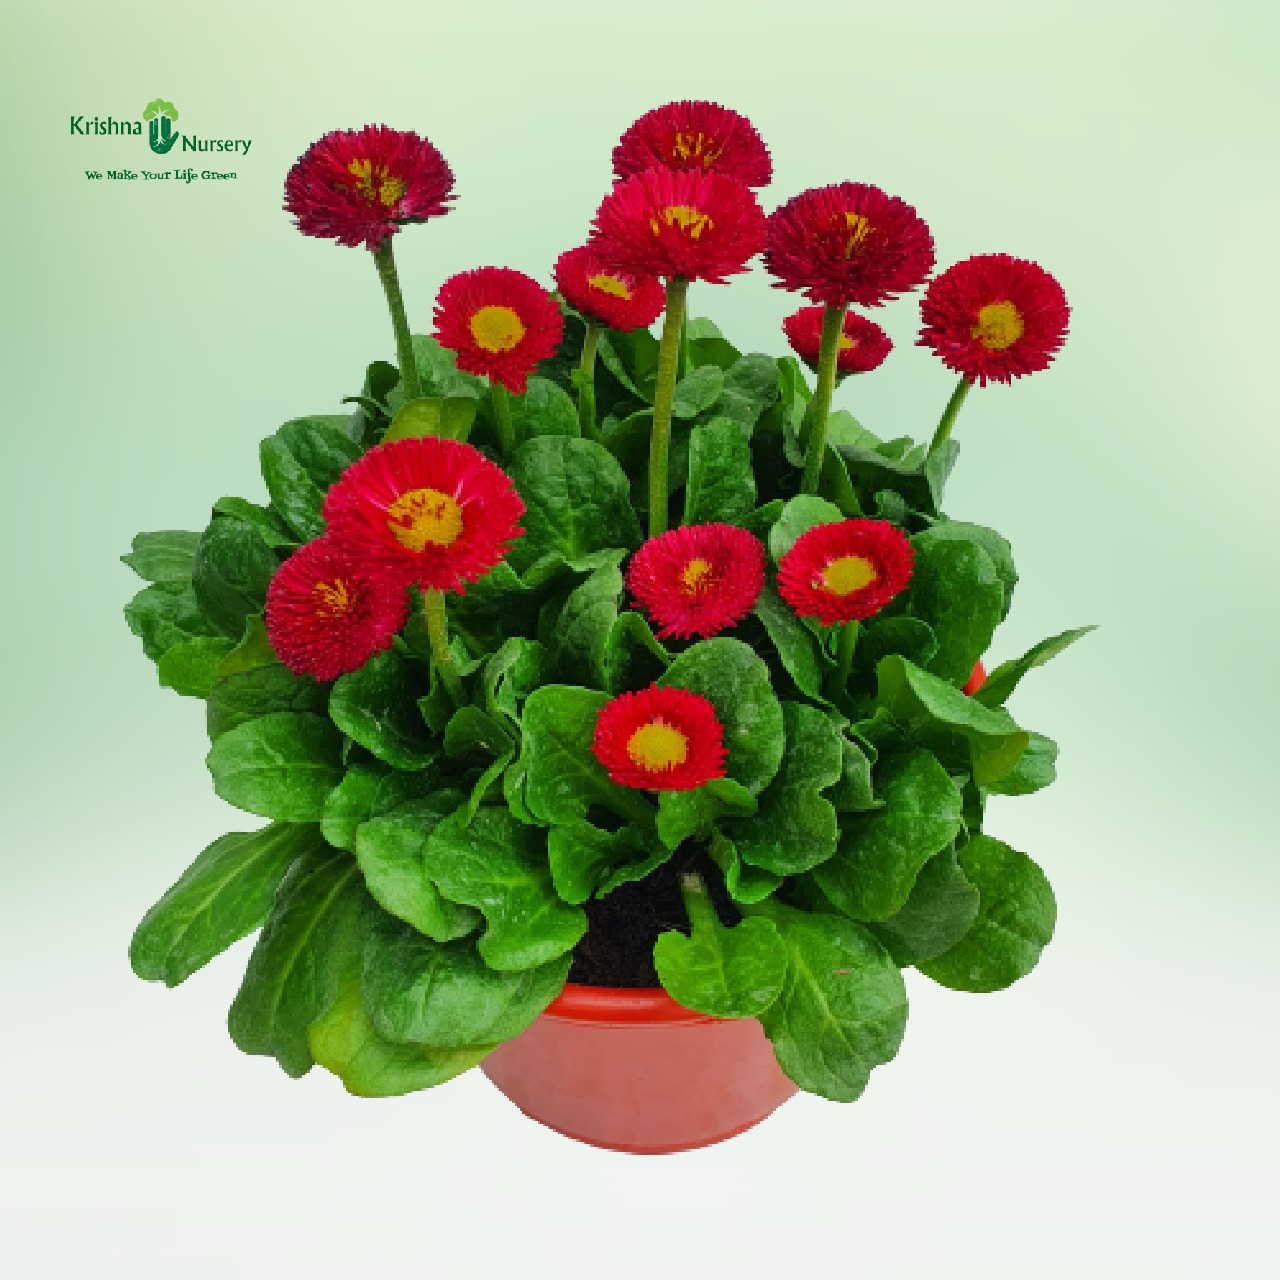 bellis-plant-red-flower